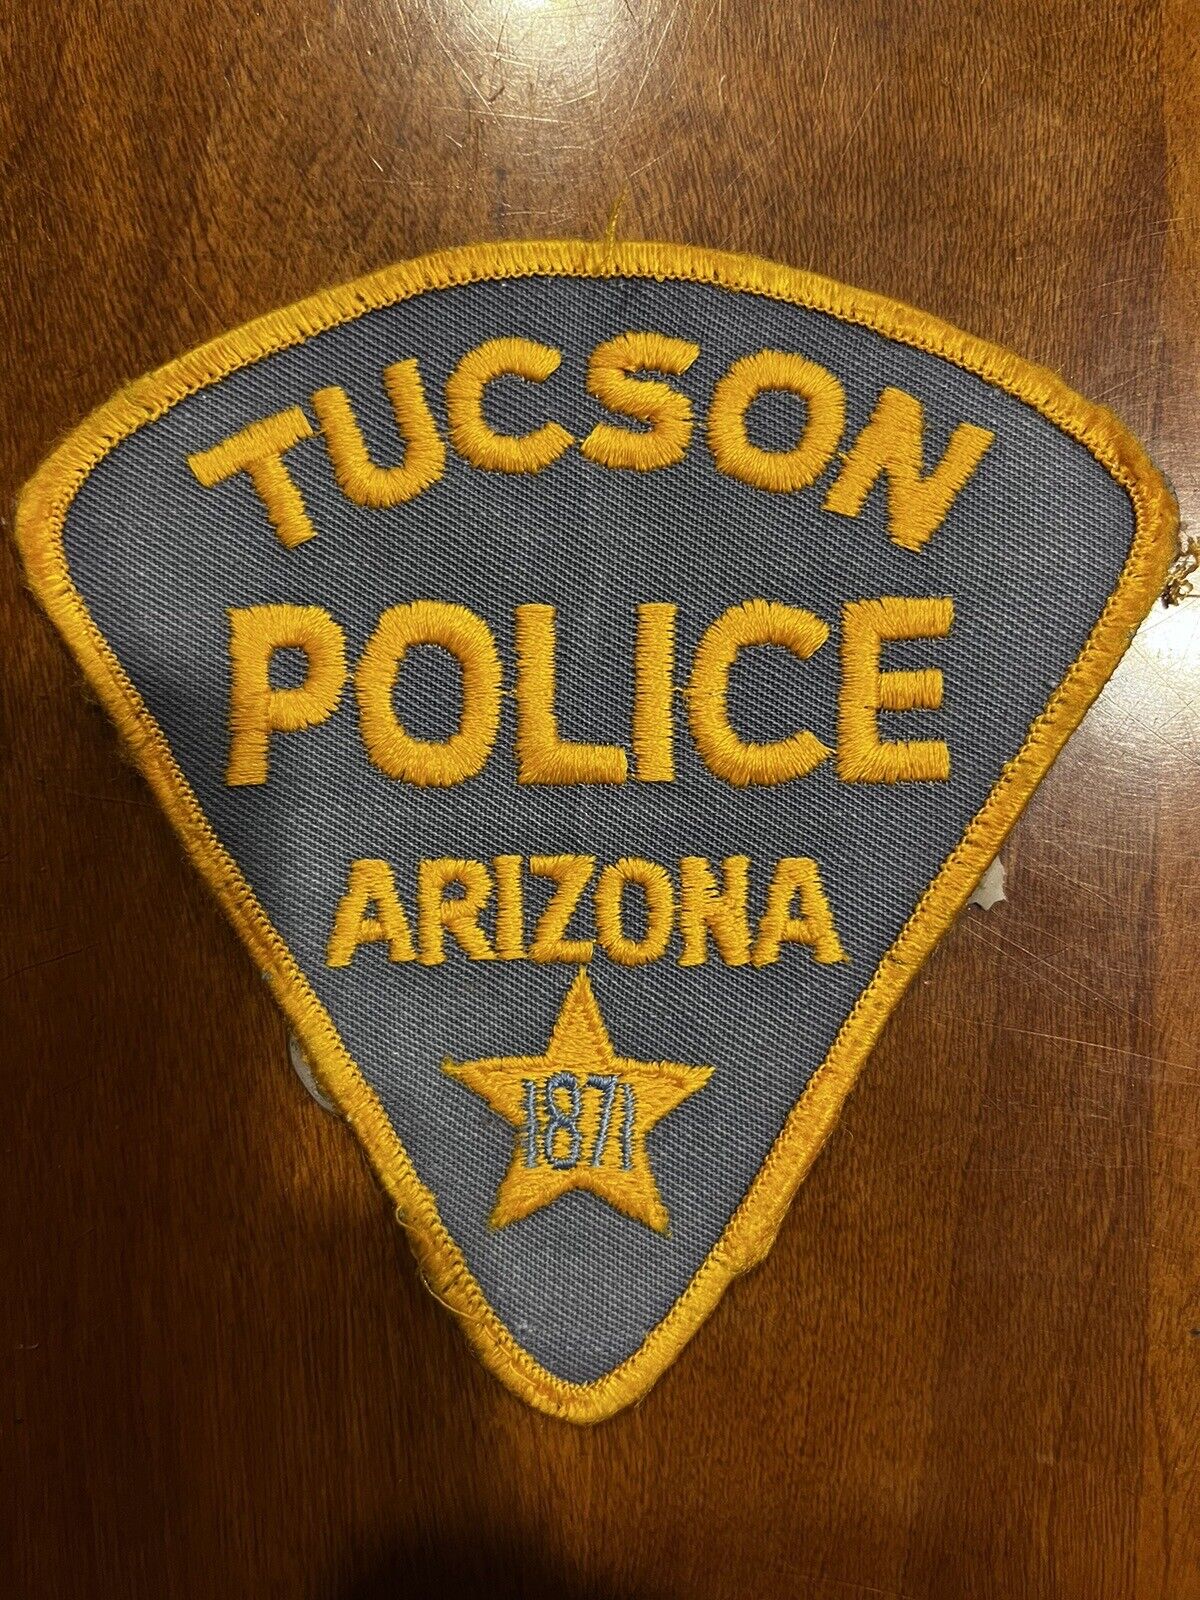 Tucson, Arizona Police Patch